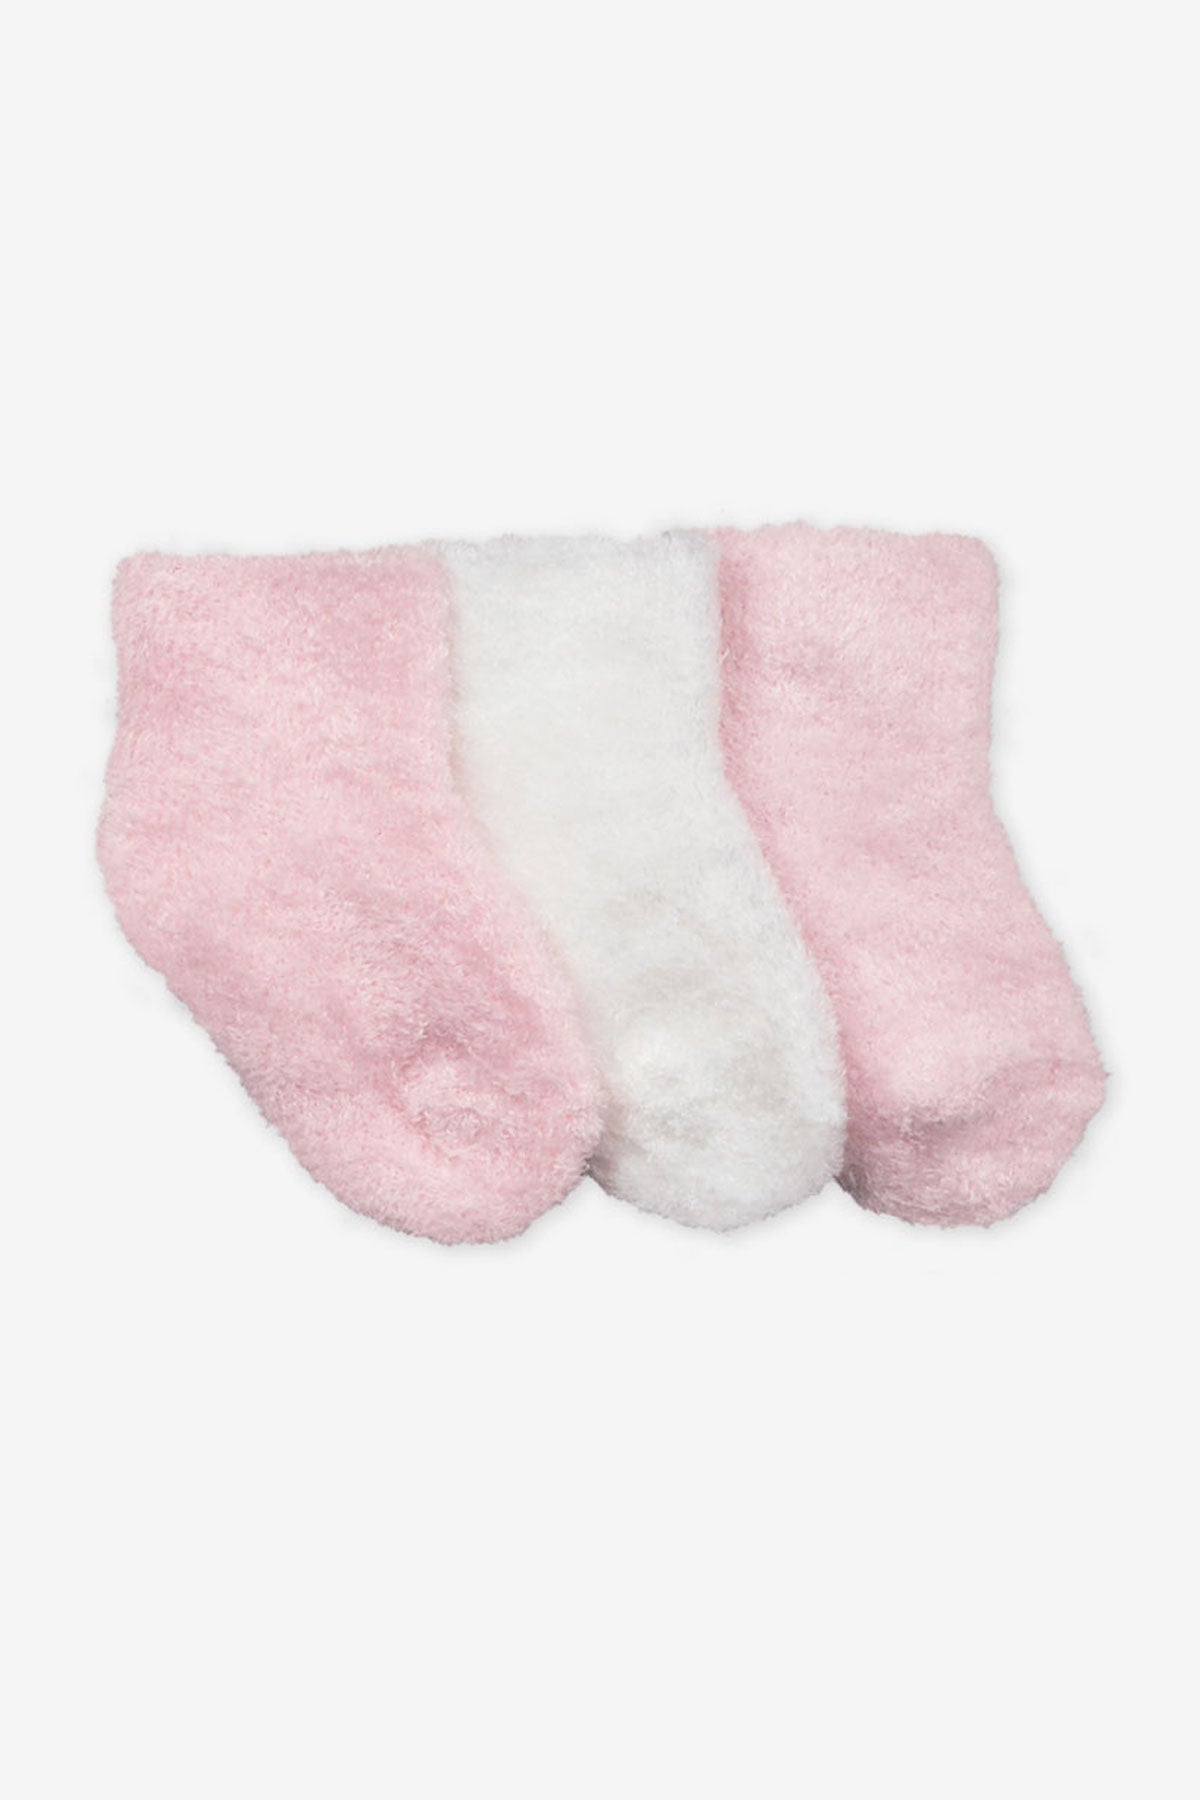 Baby Moo Little Puppy Anti-Skid 2 Pack Socks - Pink